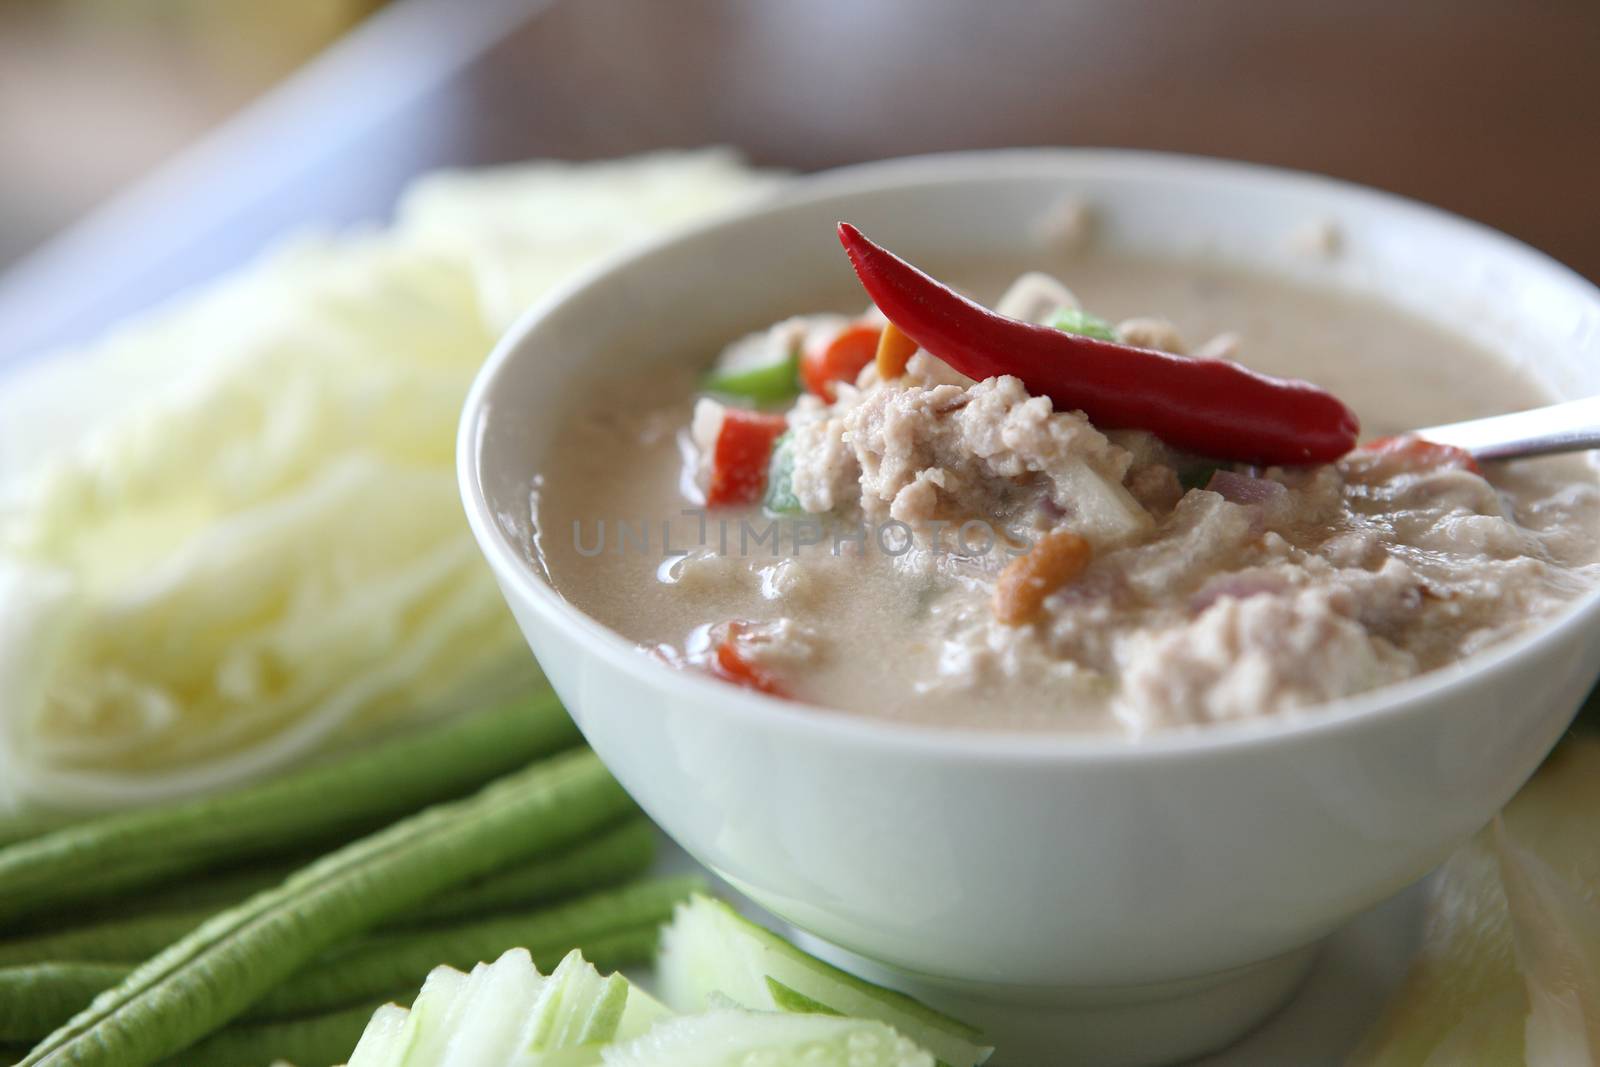  Thai food soya bean dipping sauce in pork with vegetable on woo by piyato